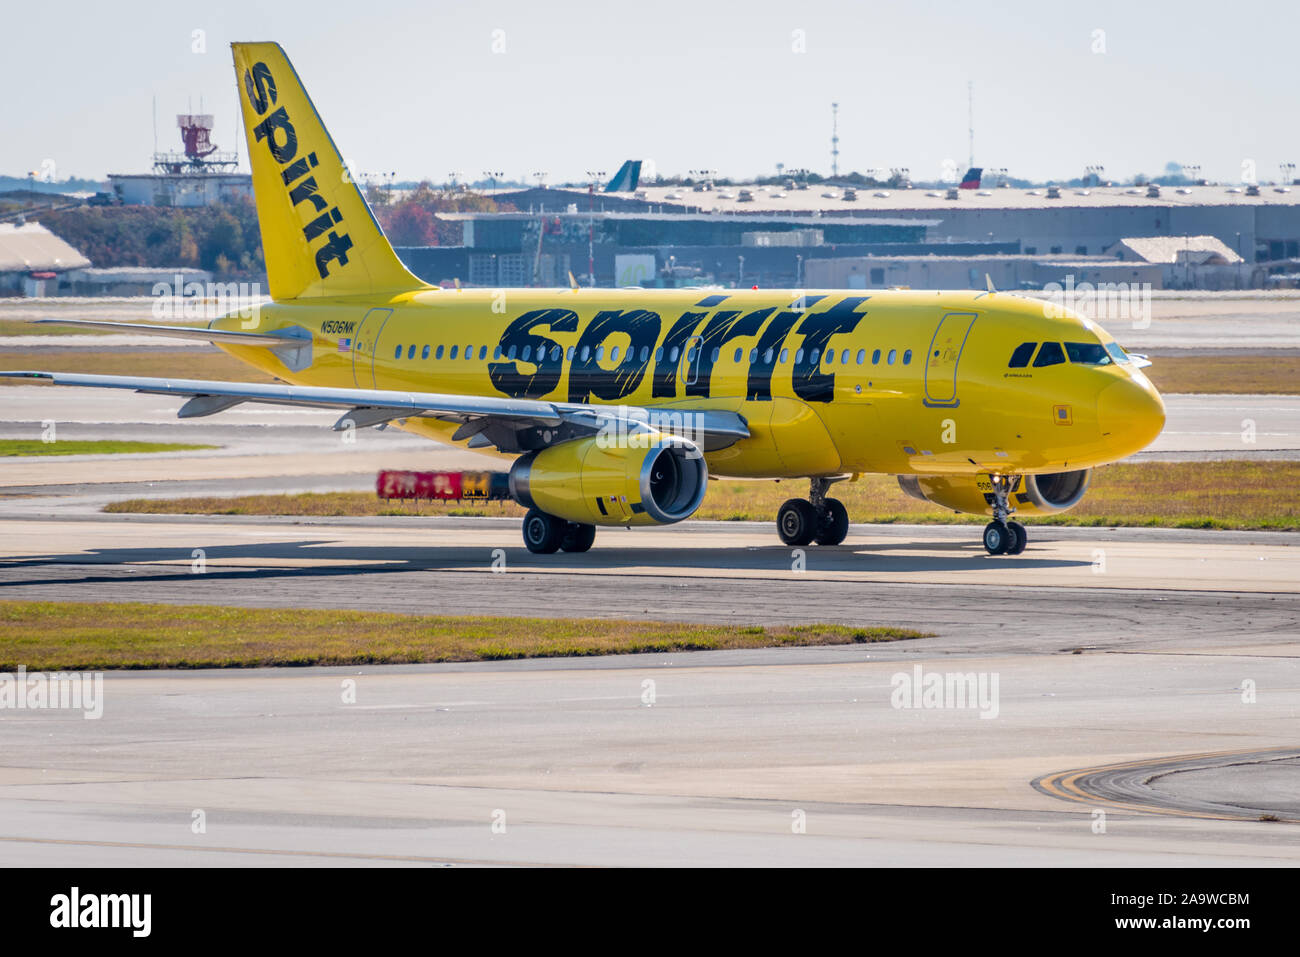 Spirit Airlines passenger jet on the runway at Hartsfield-Jackson Atlanta International Airport in Atlanta, Georgia. Stock Photo